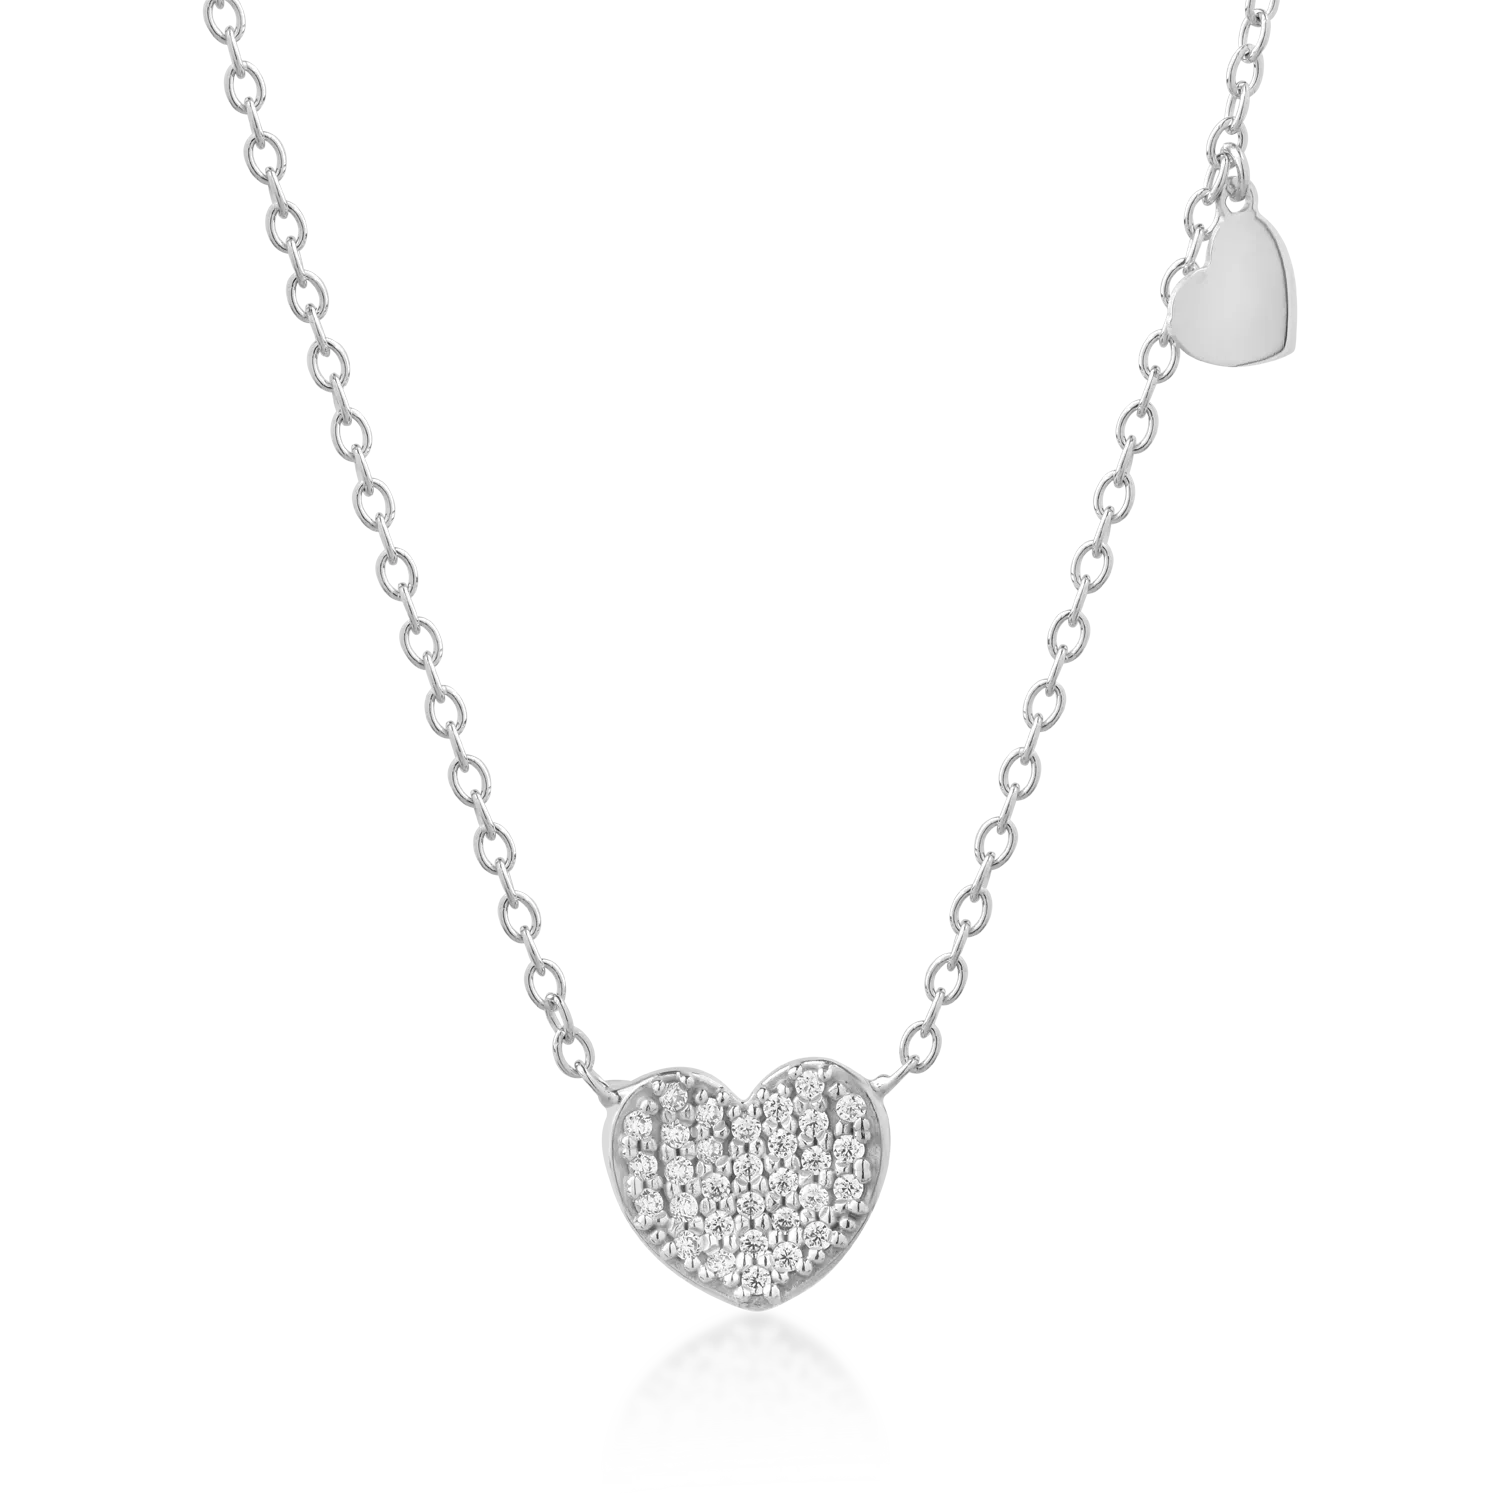 14K white gold hearts pendant necklace